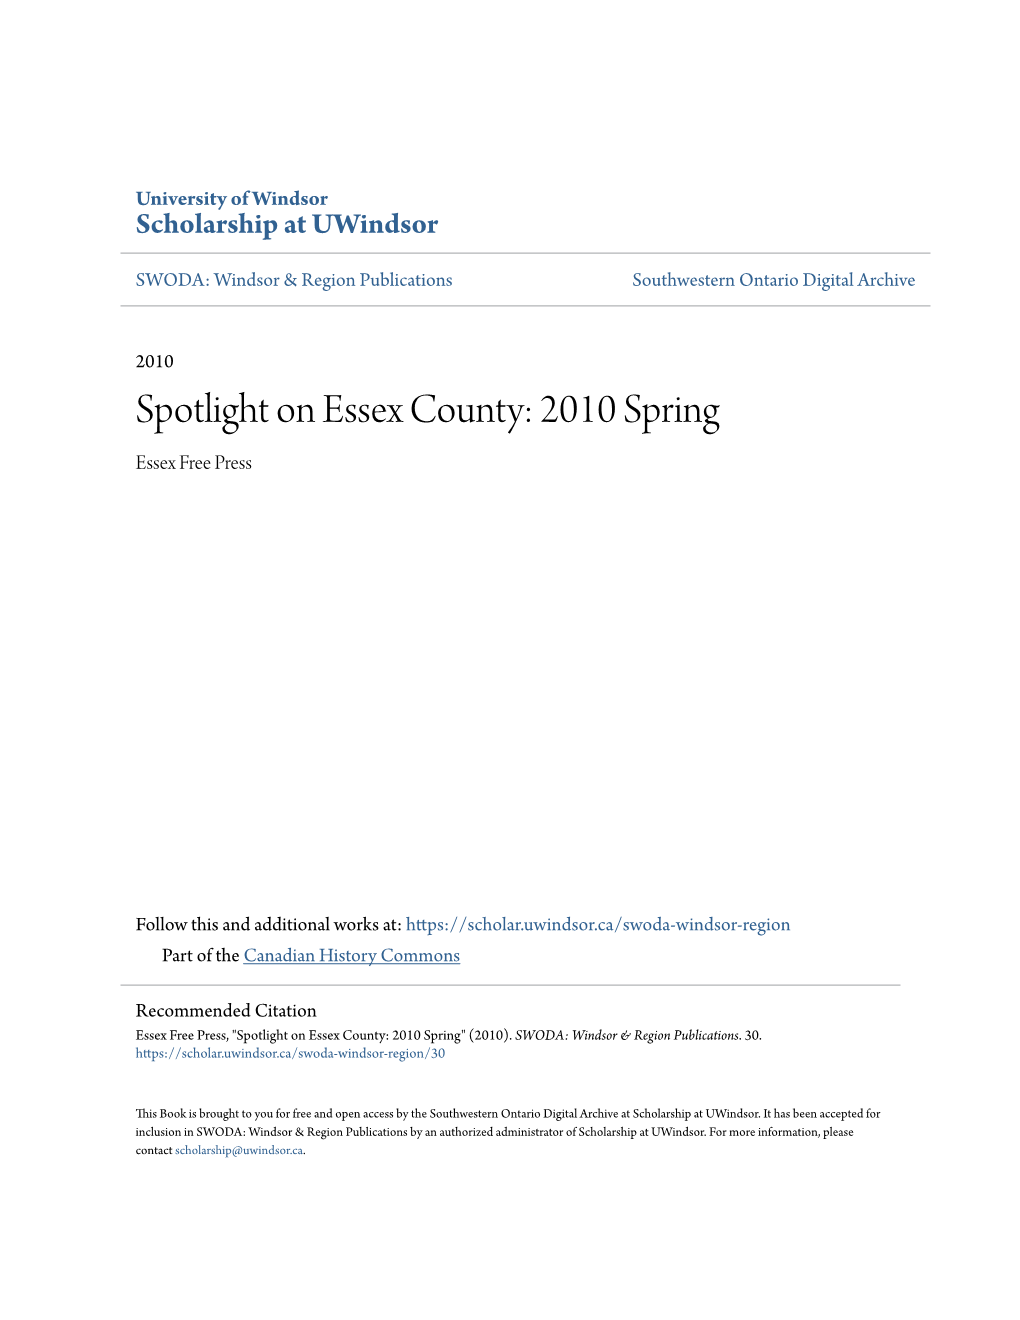 Spotlight on Essex County: 2010 Spring Essex Free Press